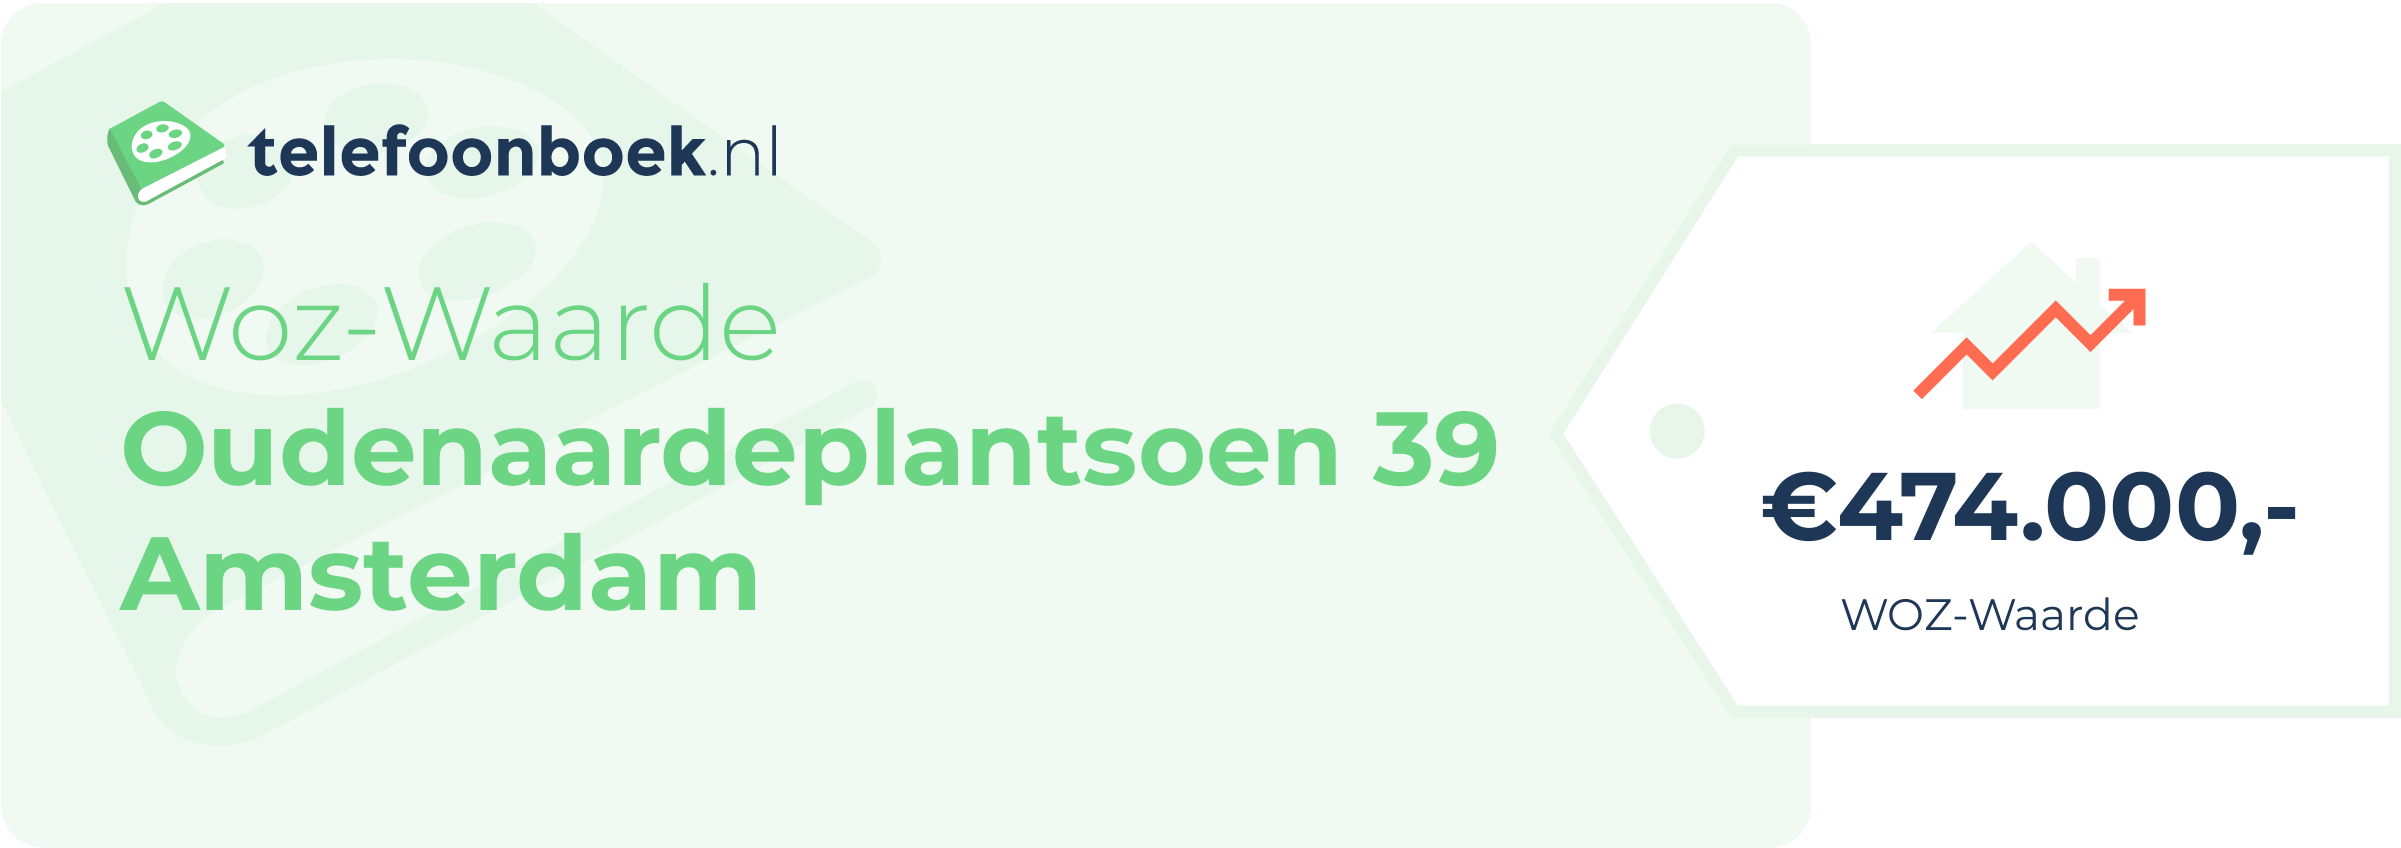 WOZ-waarde Oudenaardeplantsoen 39 Amsterdam